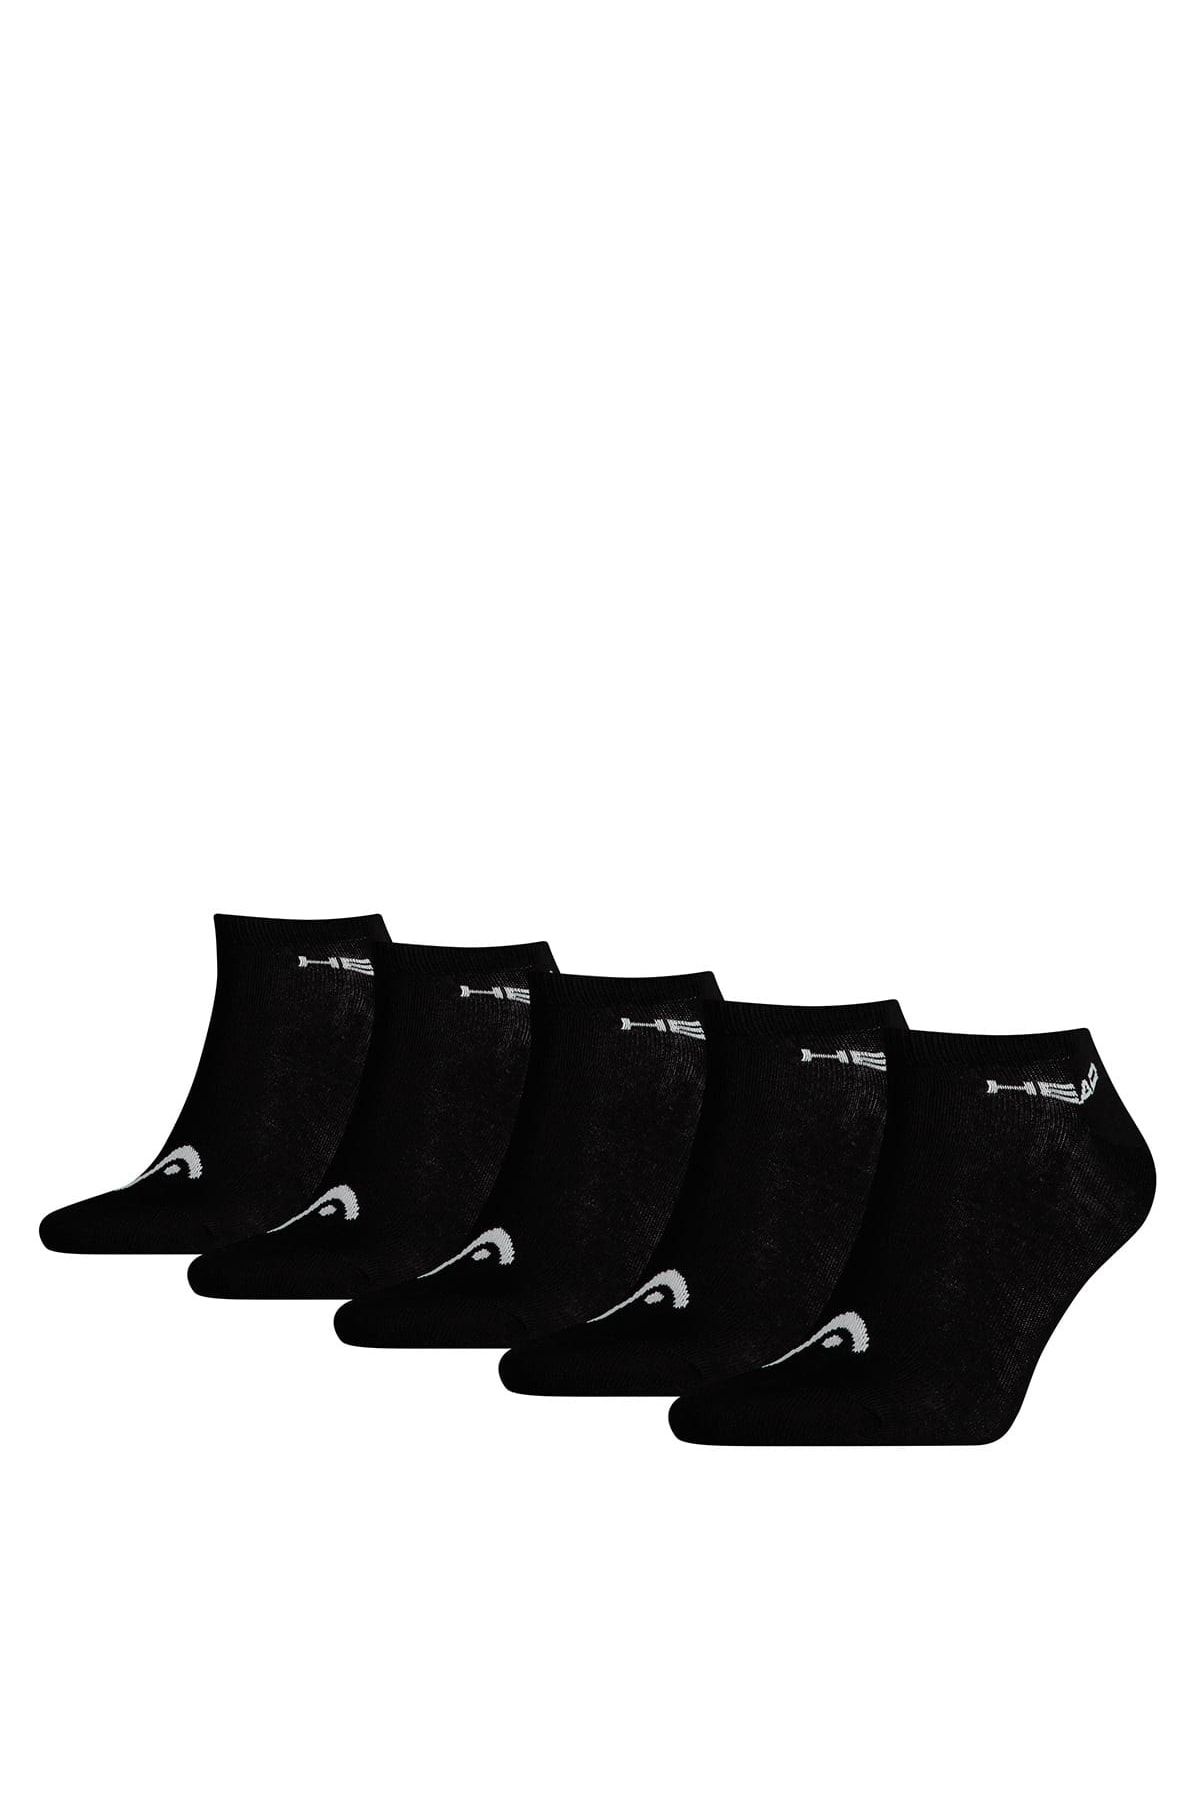 Kurzsocken, Socken, - Pack - 5er Unisex Trendyol einfarbig Sneaker Head